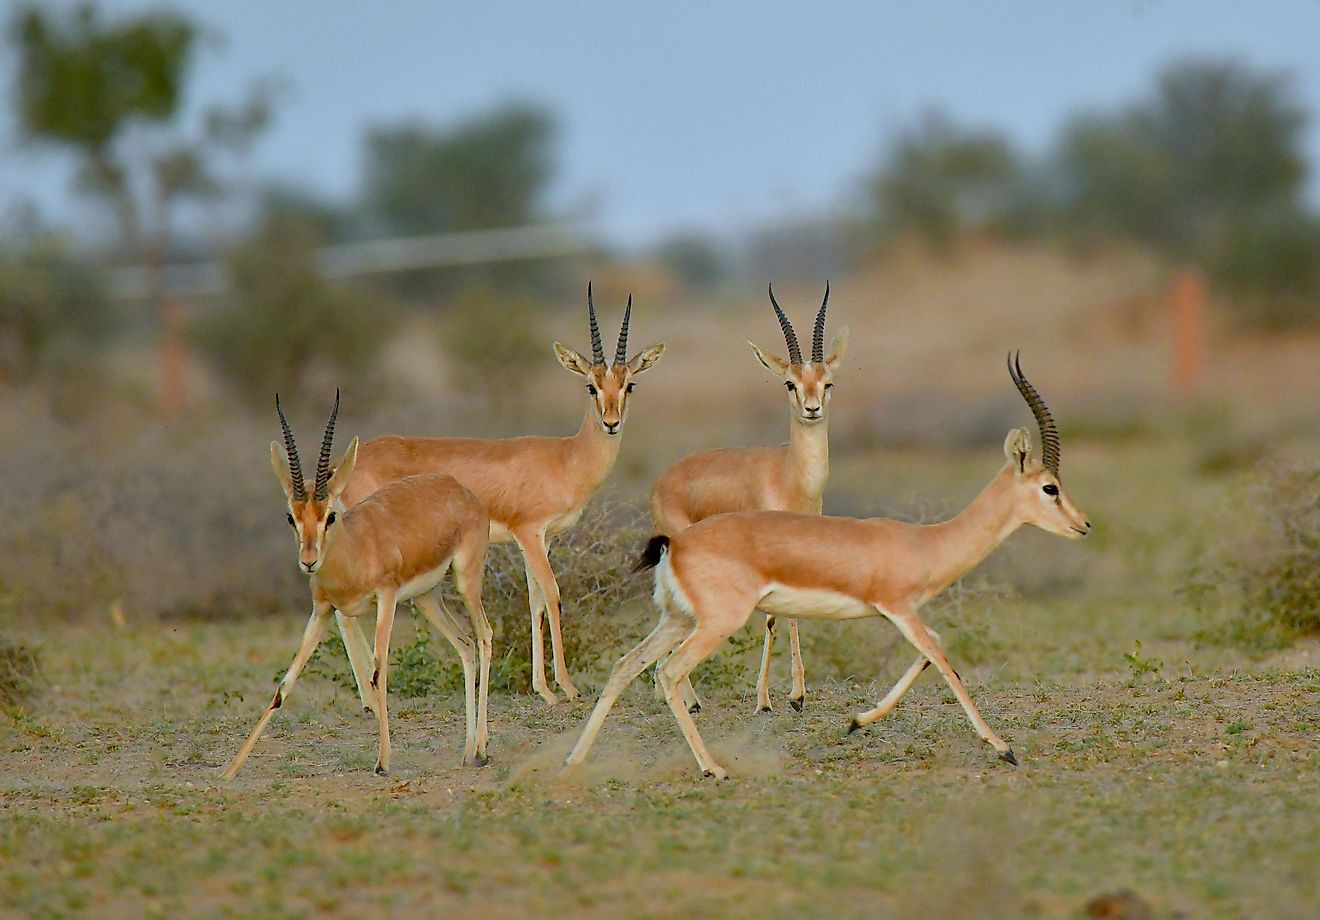 Indian gazelles or chinkaras in Rajasthan, India.